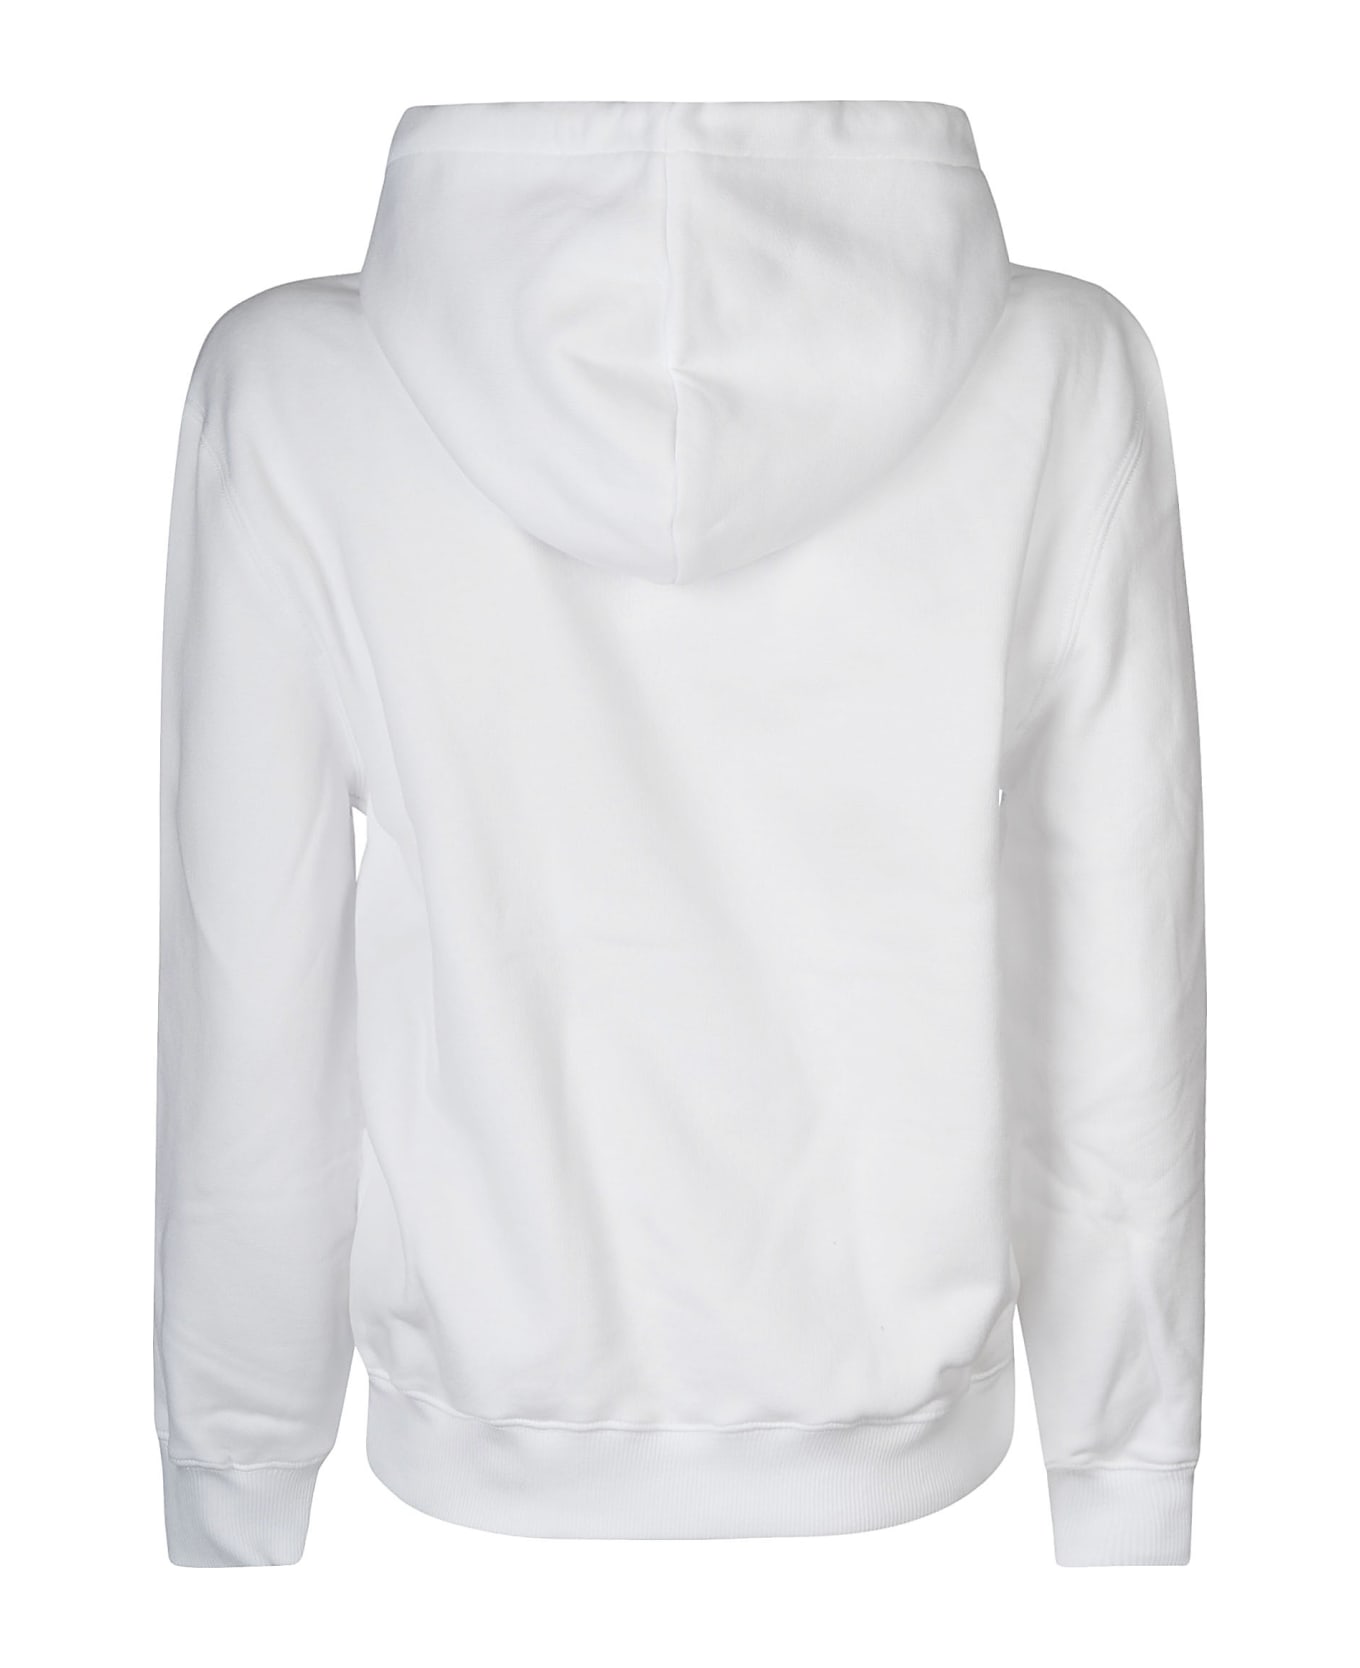 Lanvin Logo Embroidered Hooded Sweatshirt - Optic White